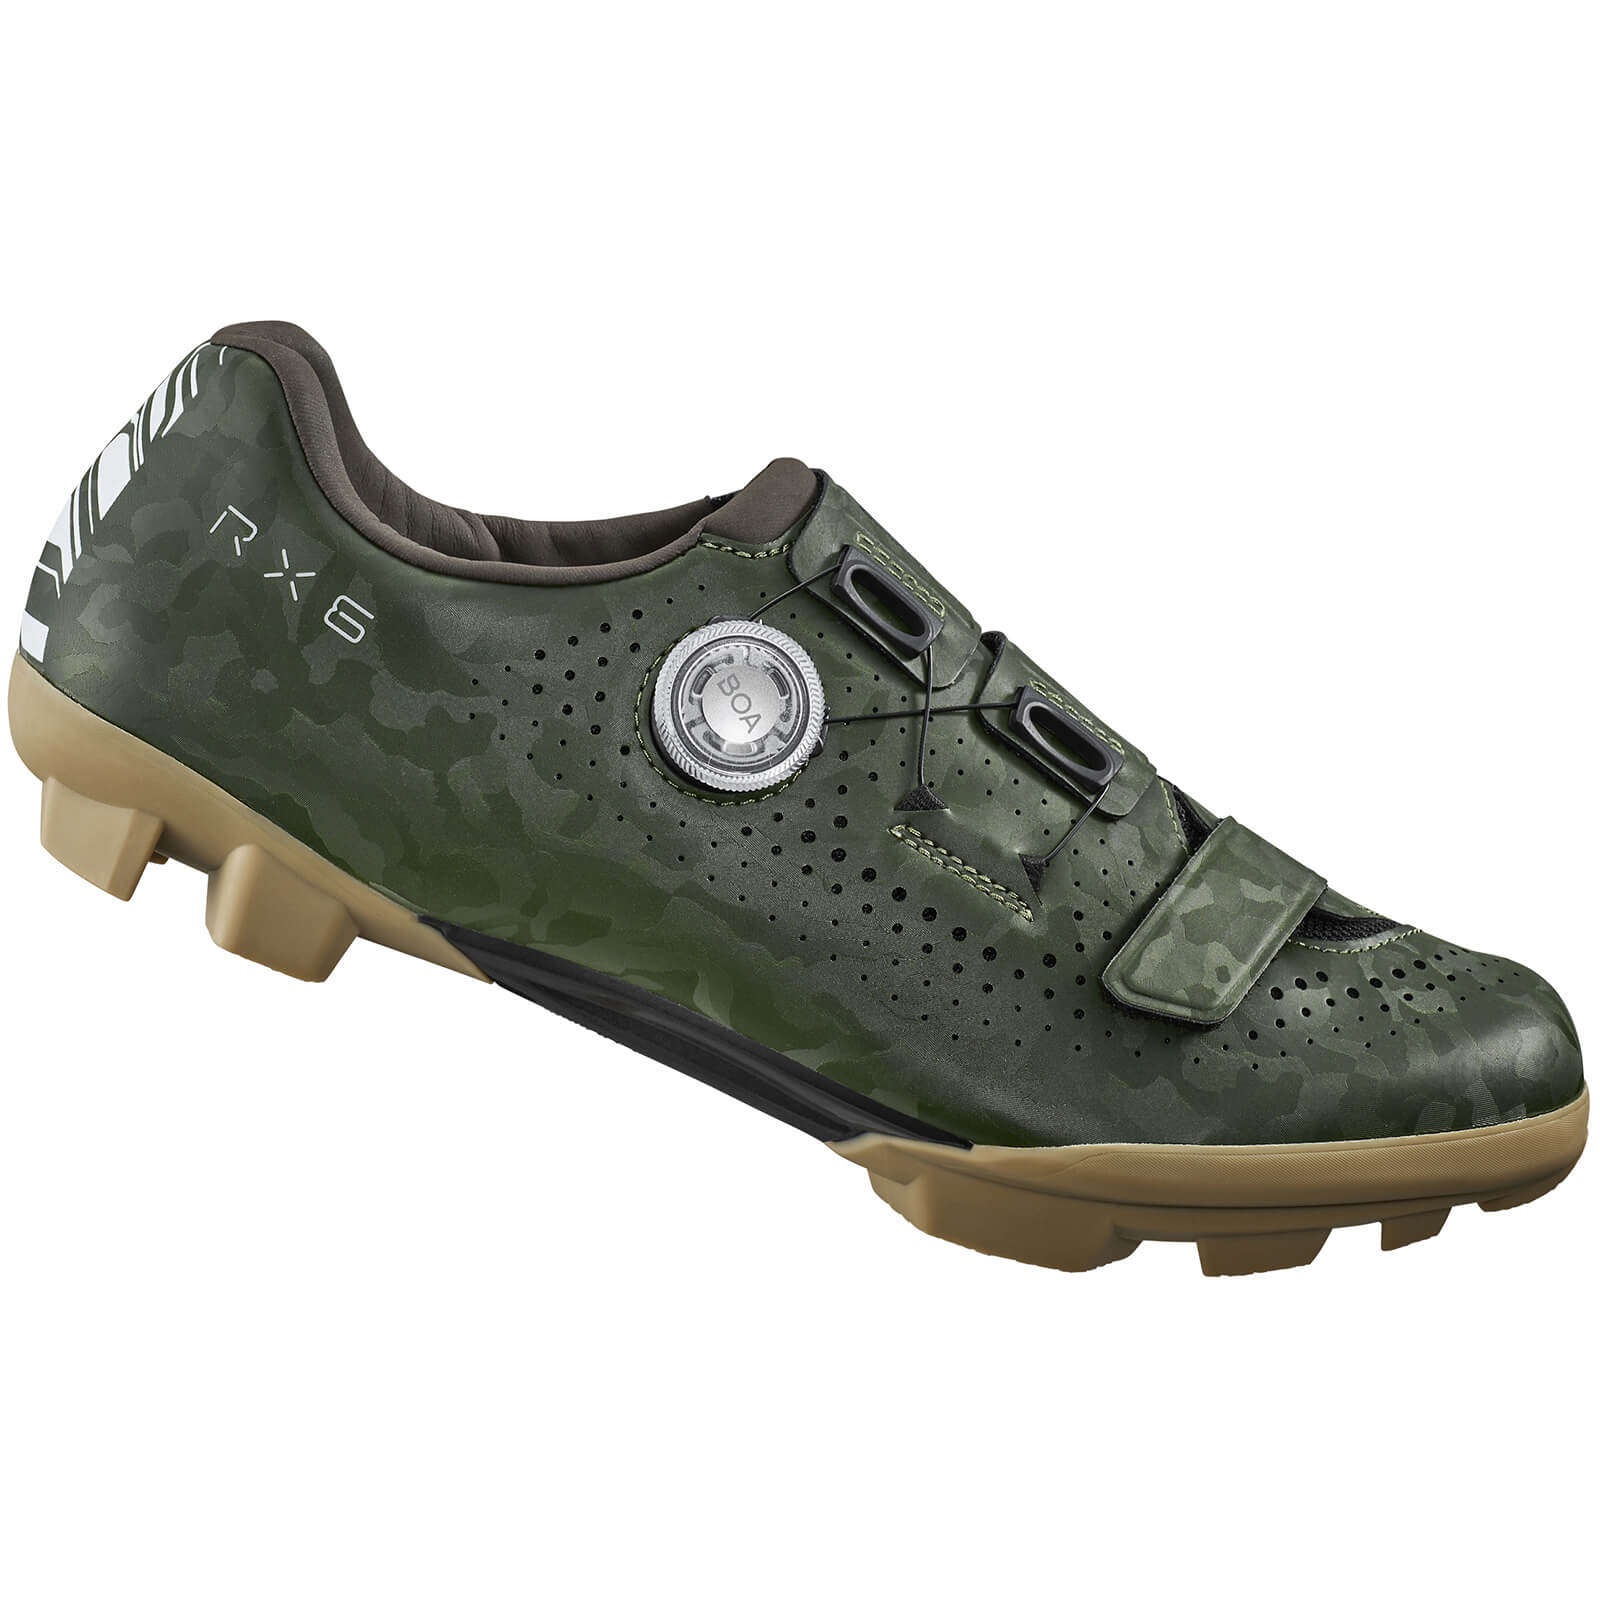 Shimano RX600 Gravel Cycling Shoes - 44 - Green